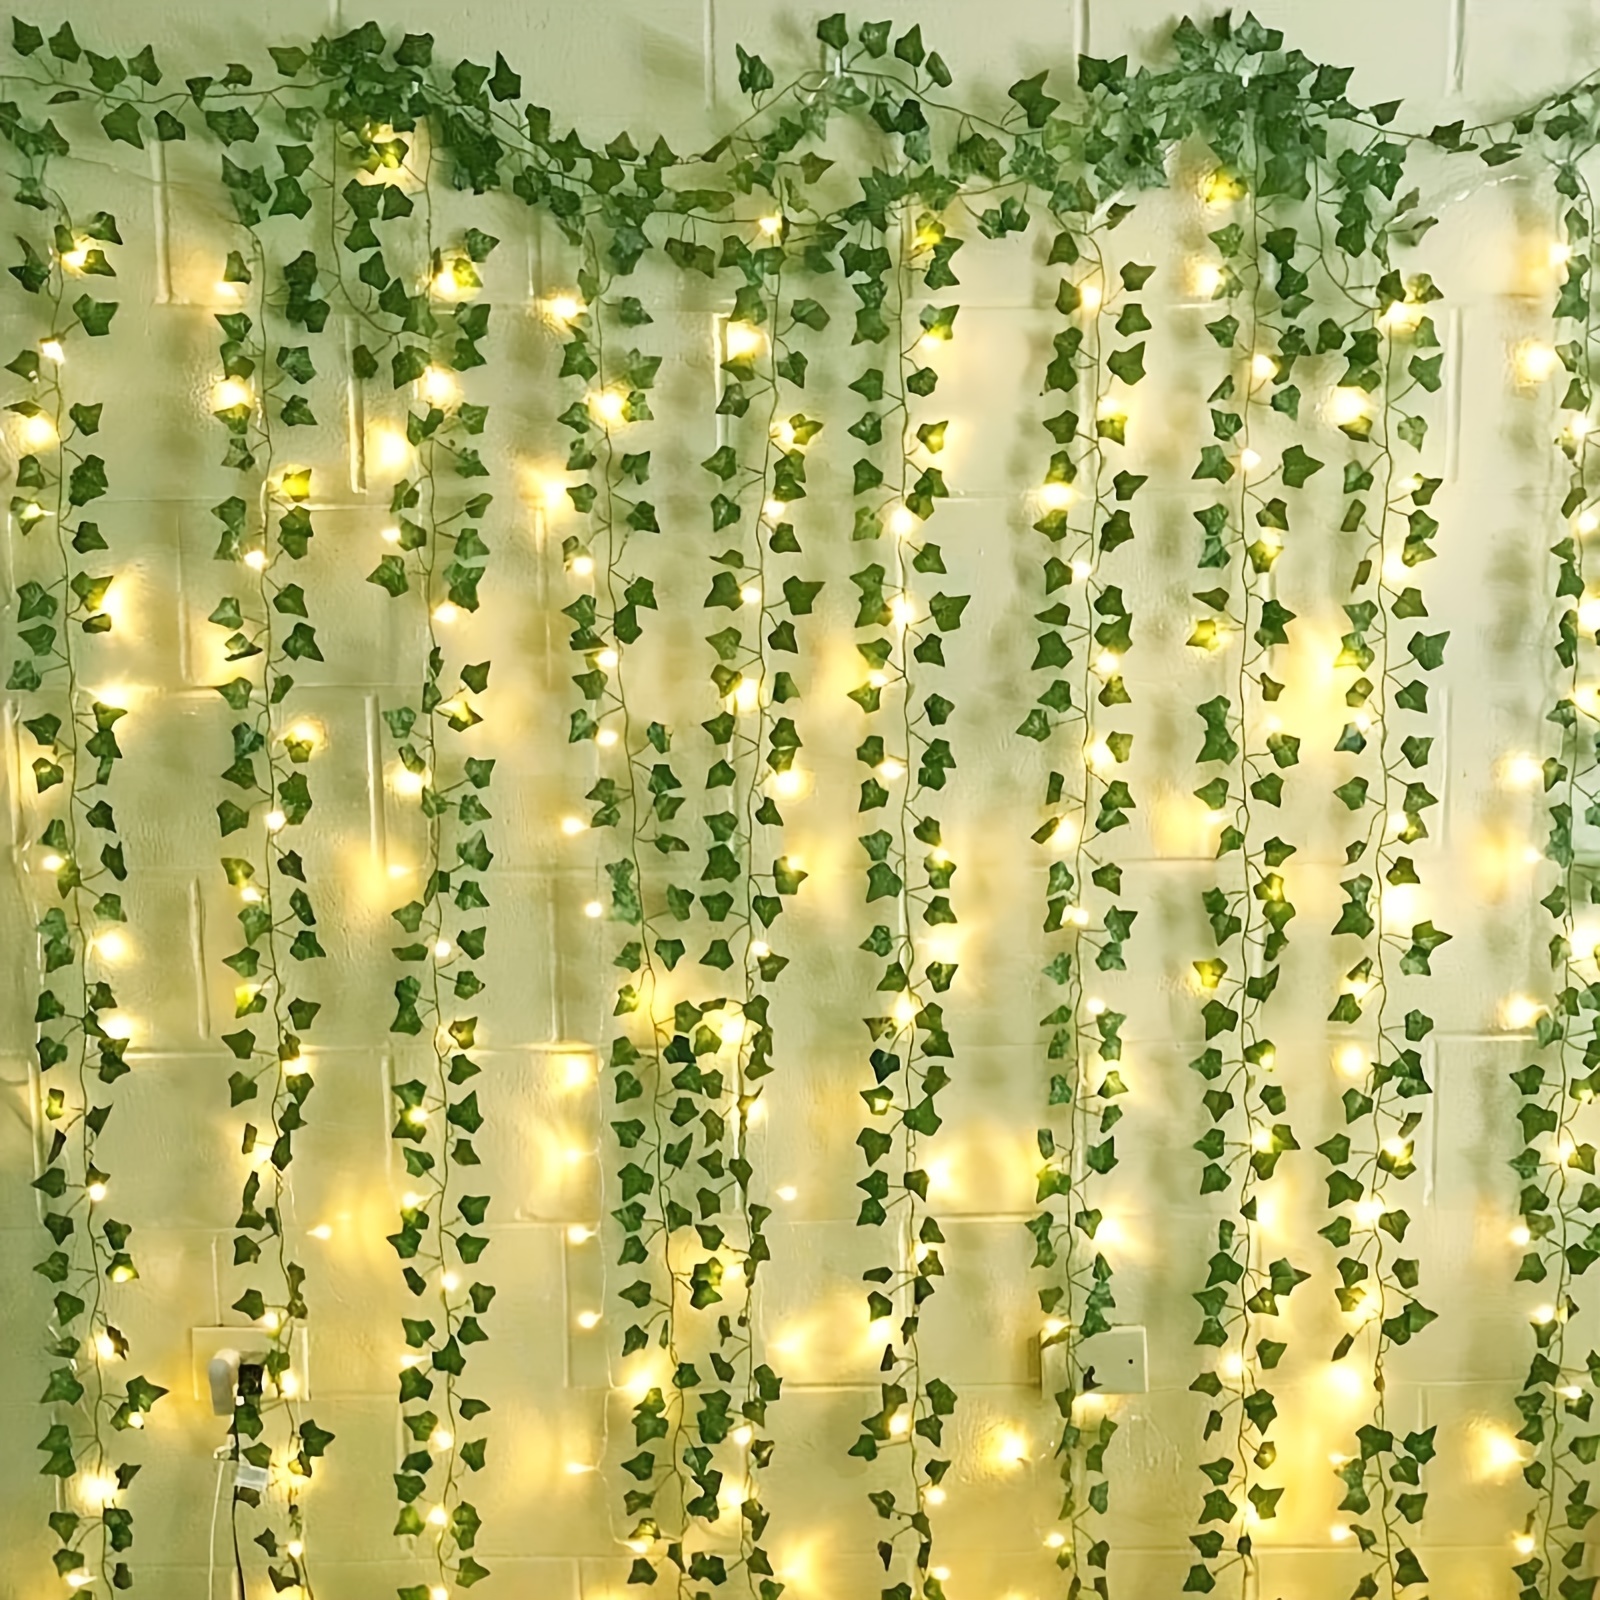 

12 Packs Vine Hanging Garland String Light, Artificial Ivy, 84ft Garland Hanging Plants Fake Vines With 100/200 Led String Light For Bedroom Wedding Party Garden Wall Room Home Decor